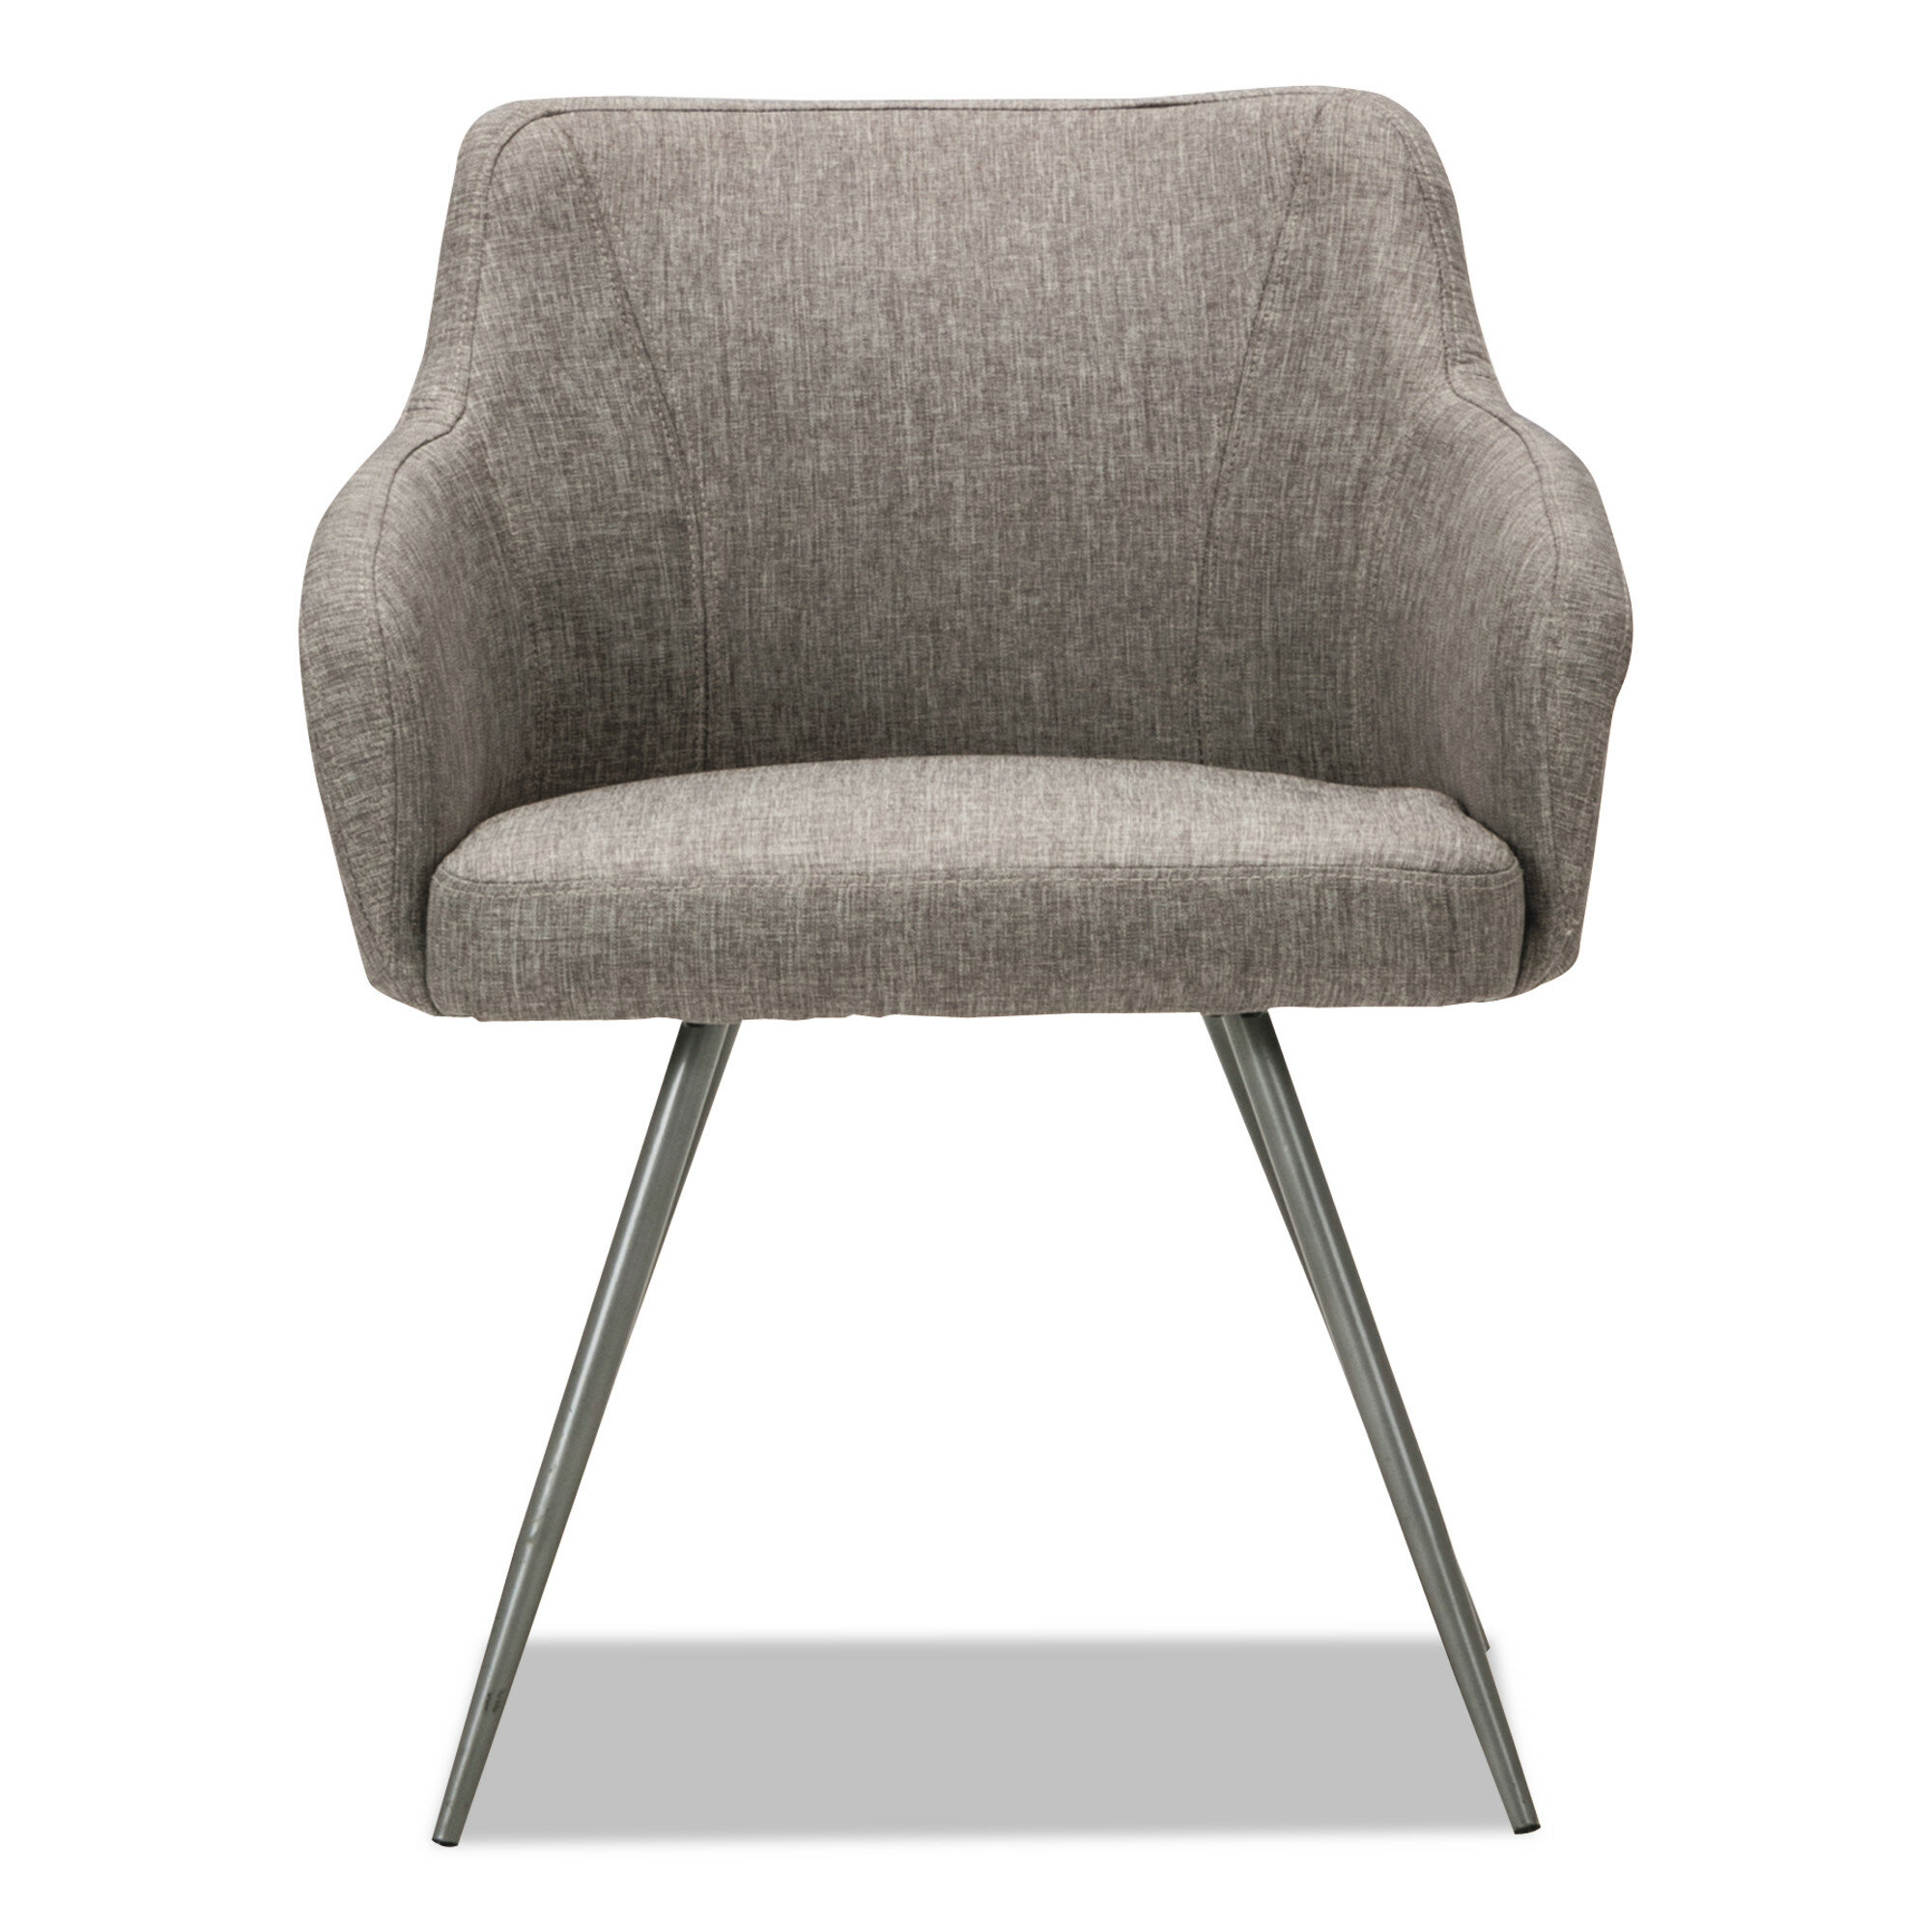 Brayden Studio Fredric Fabric Lounge Chair Reviews Wayfair